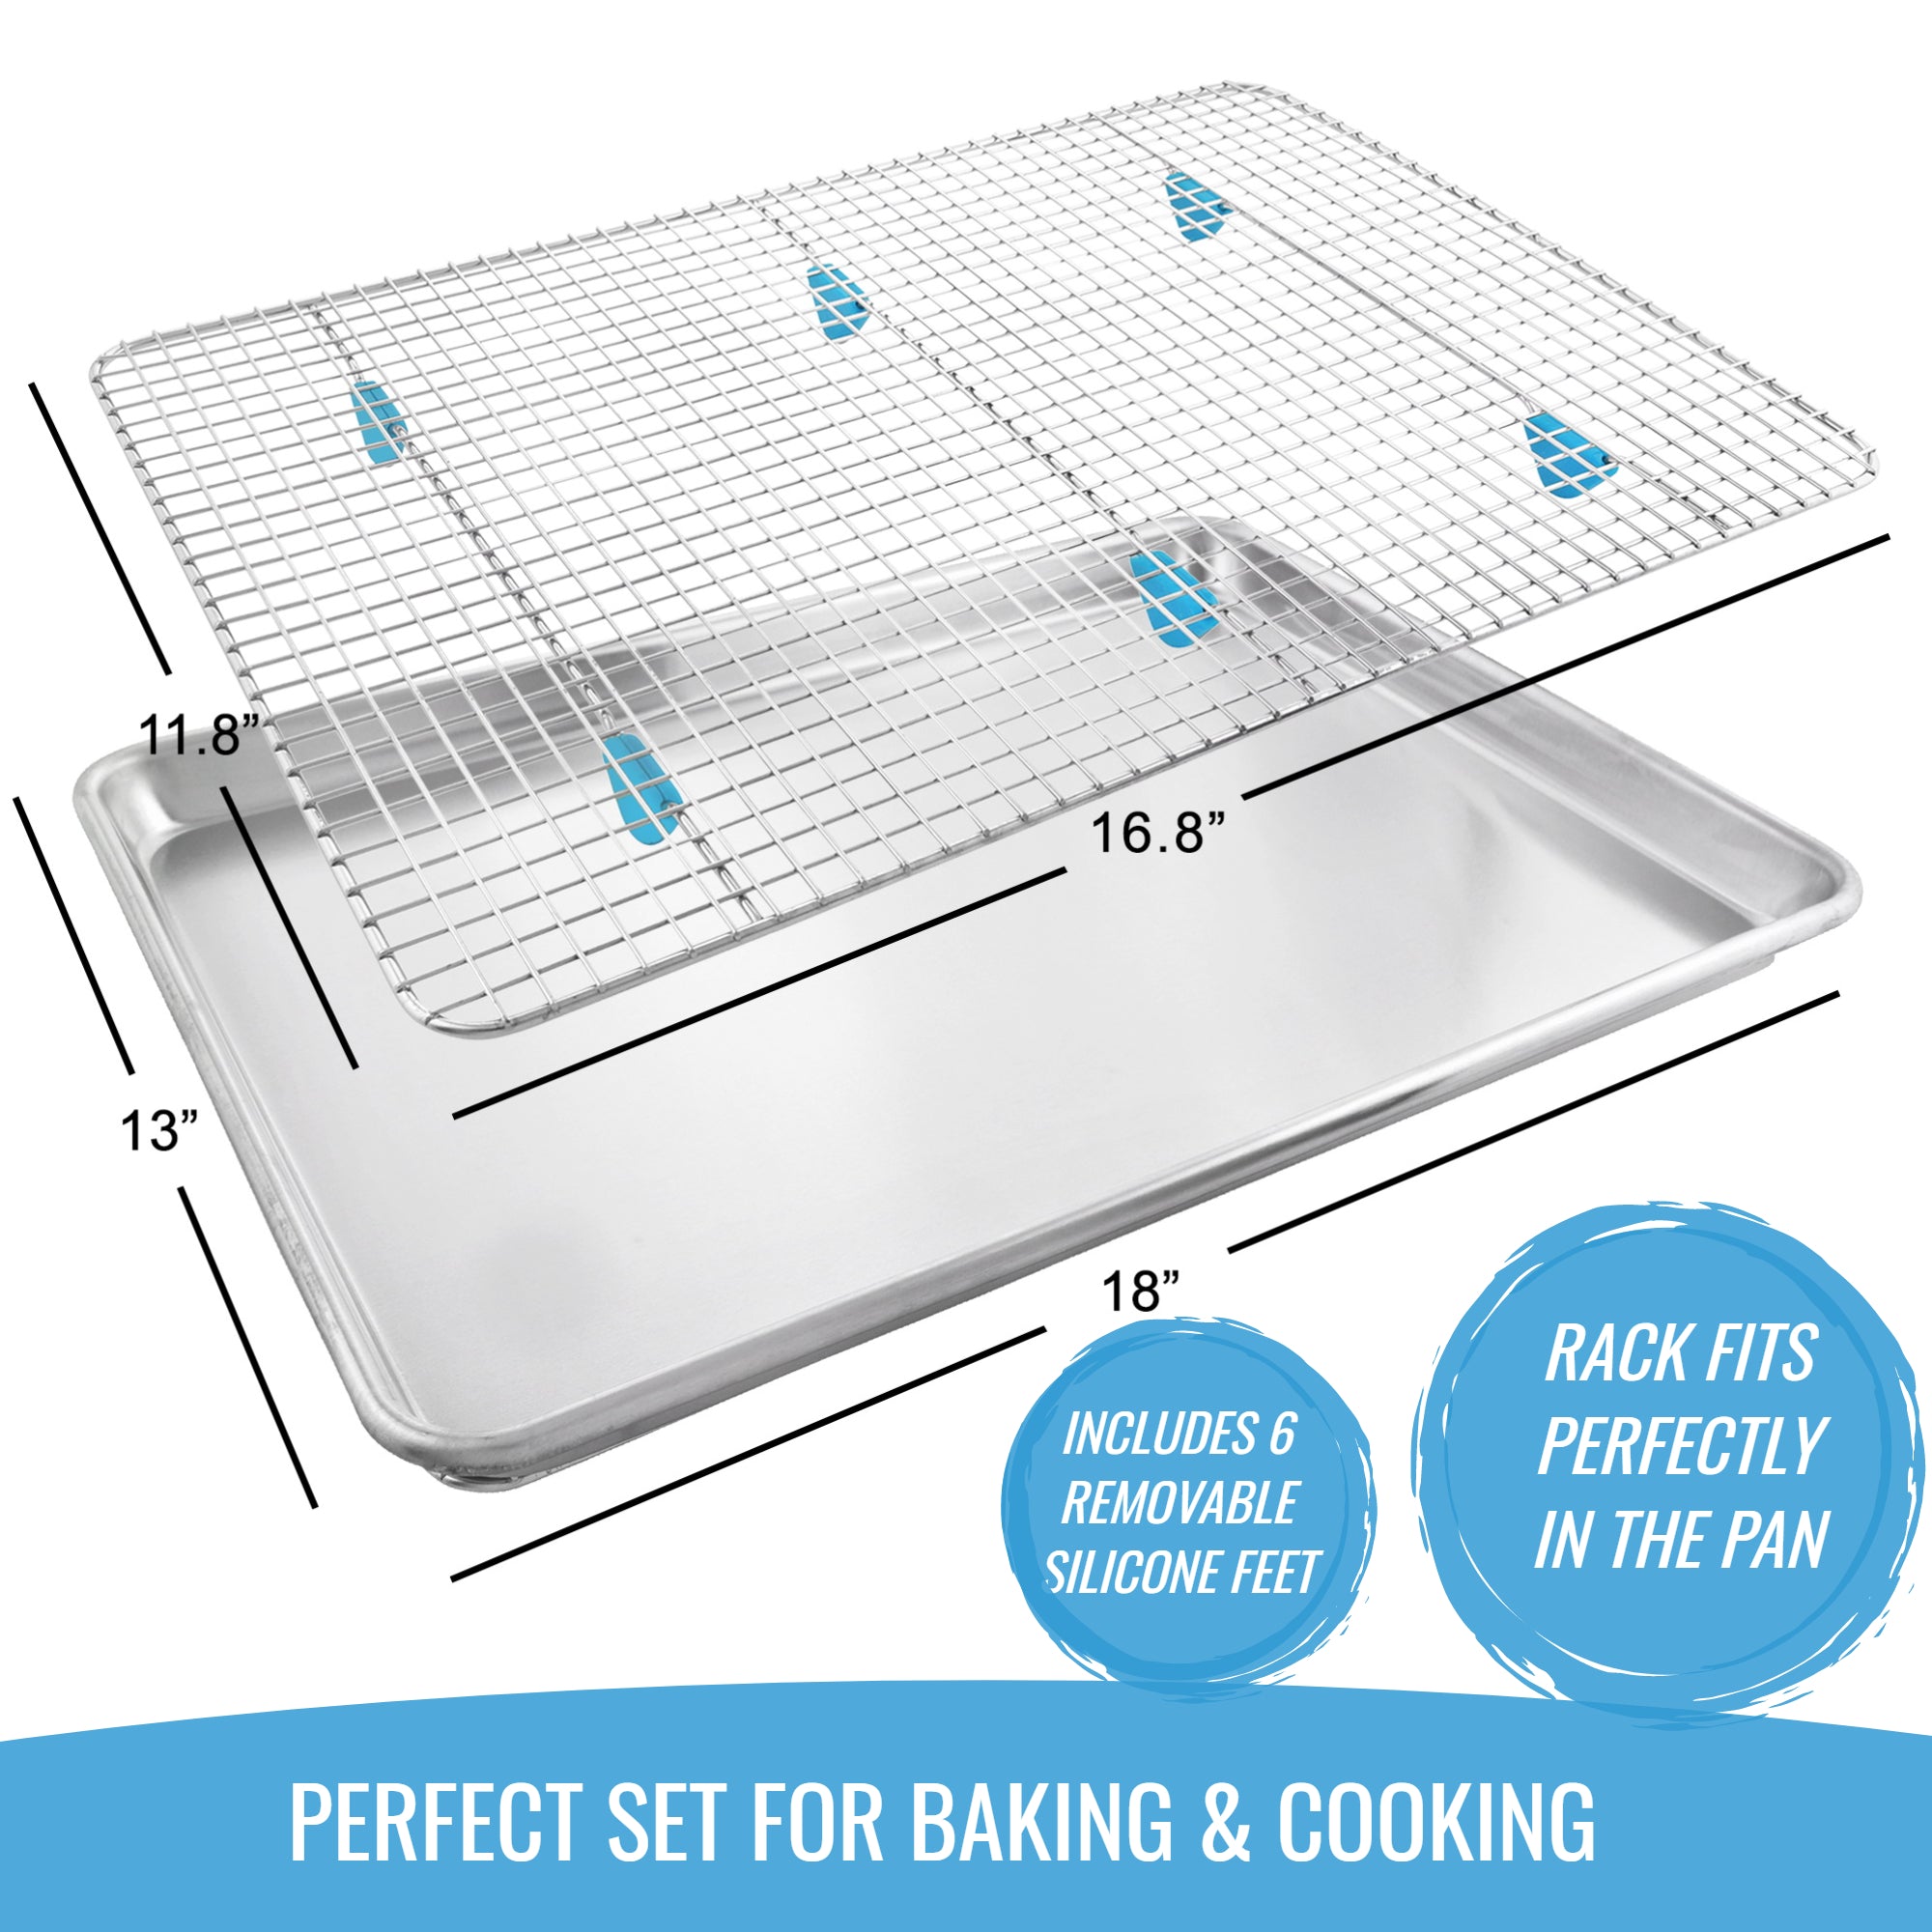 Half-Sheet Pan Set with Cooling Rack